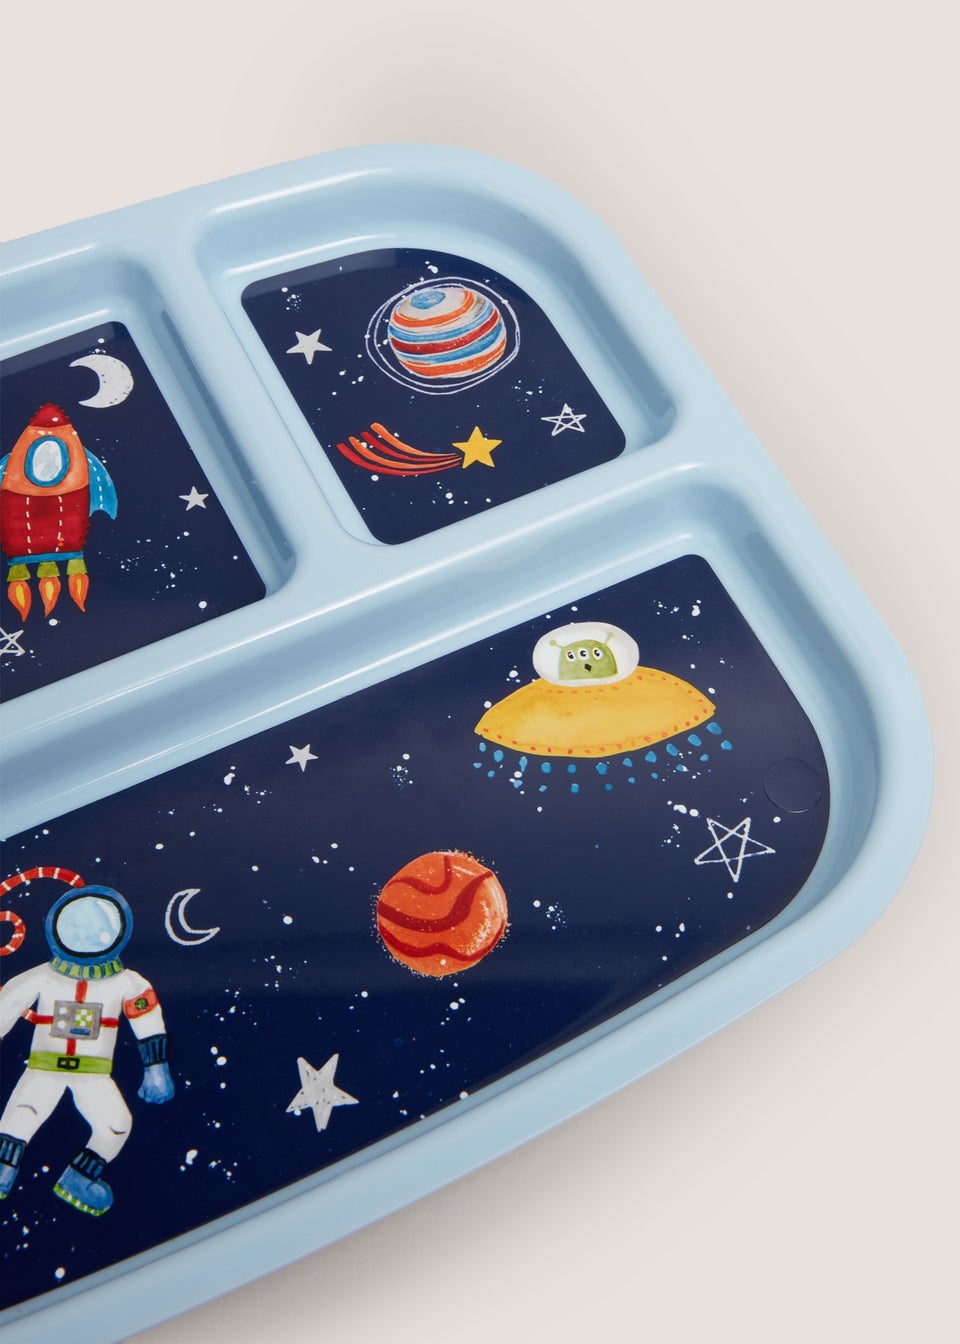 Kids Space Divide Plate (28cm x 23cm)